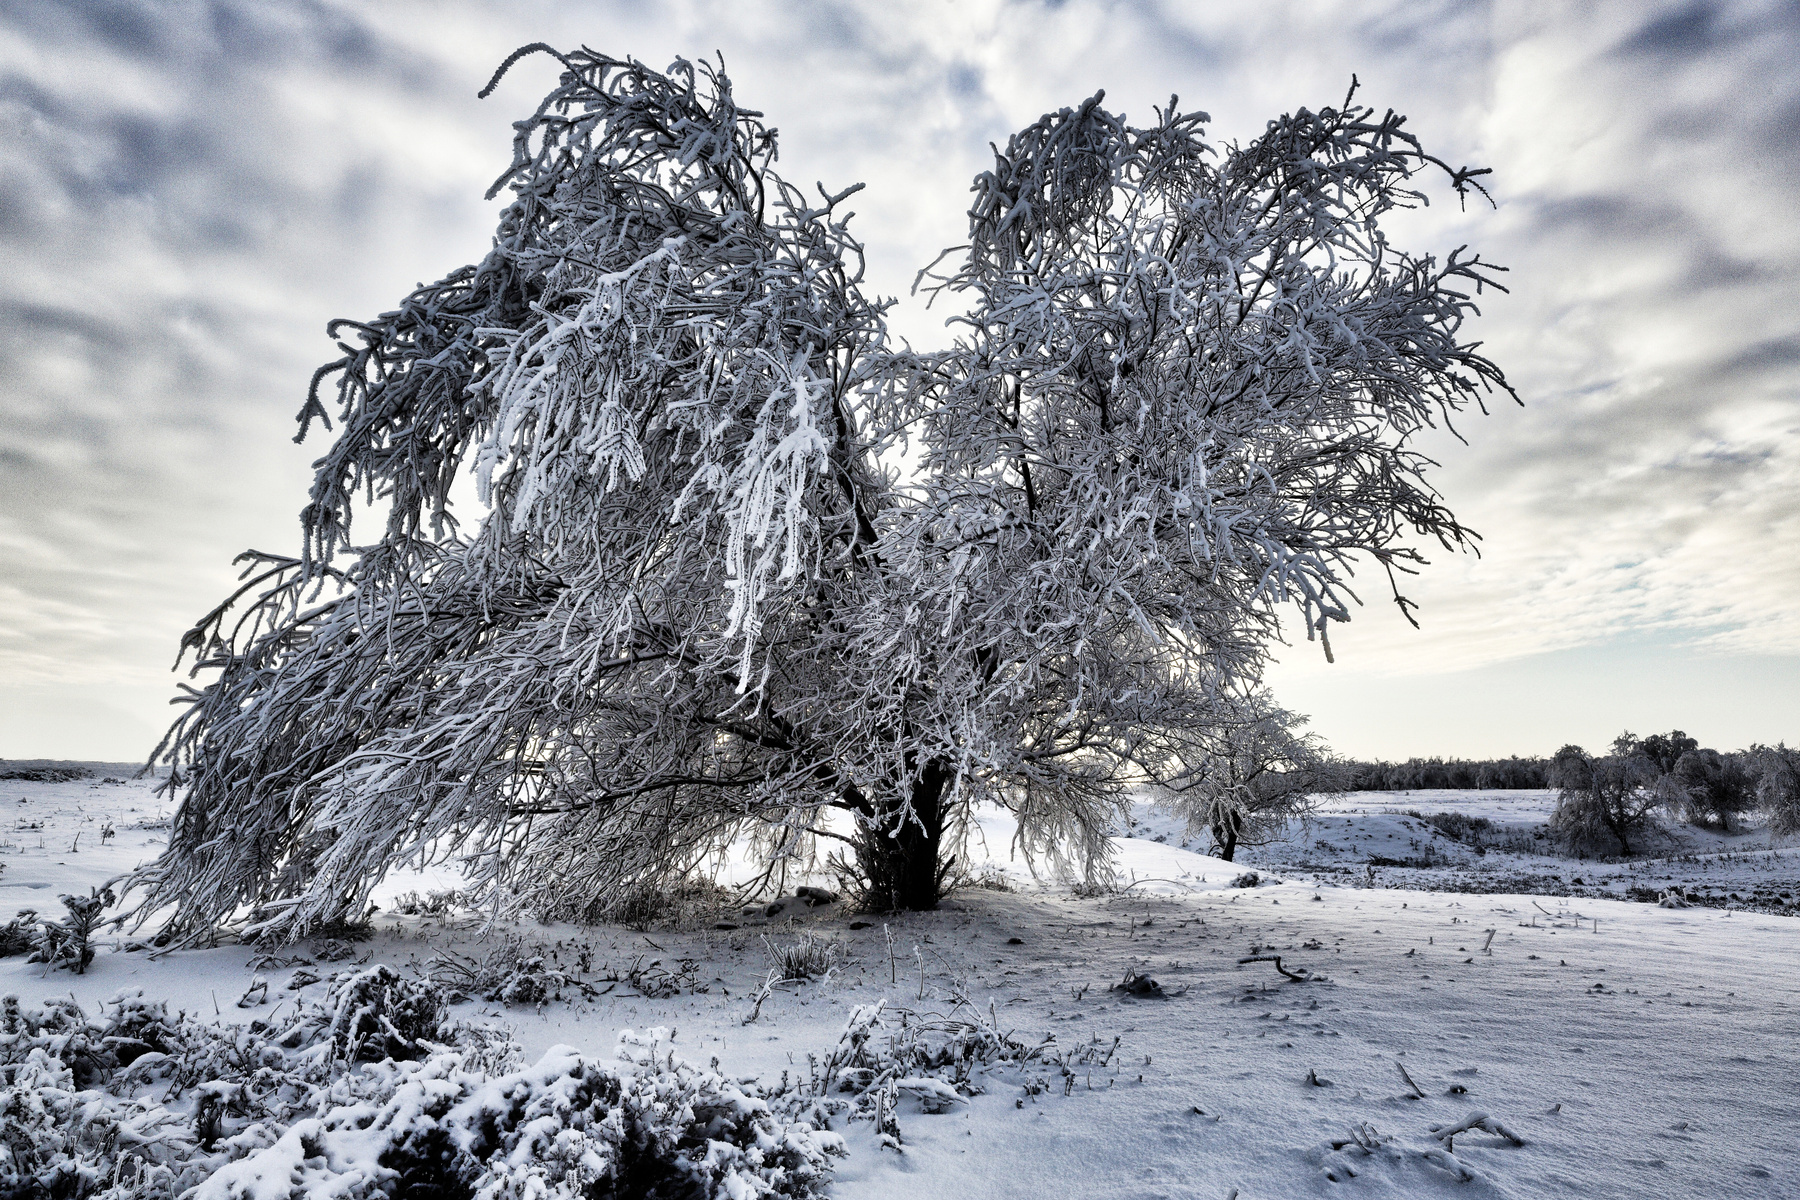 Последний день года пейзаж зима снег природа дерево мороз ветки небо облака поле холод